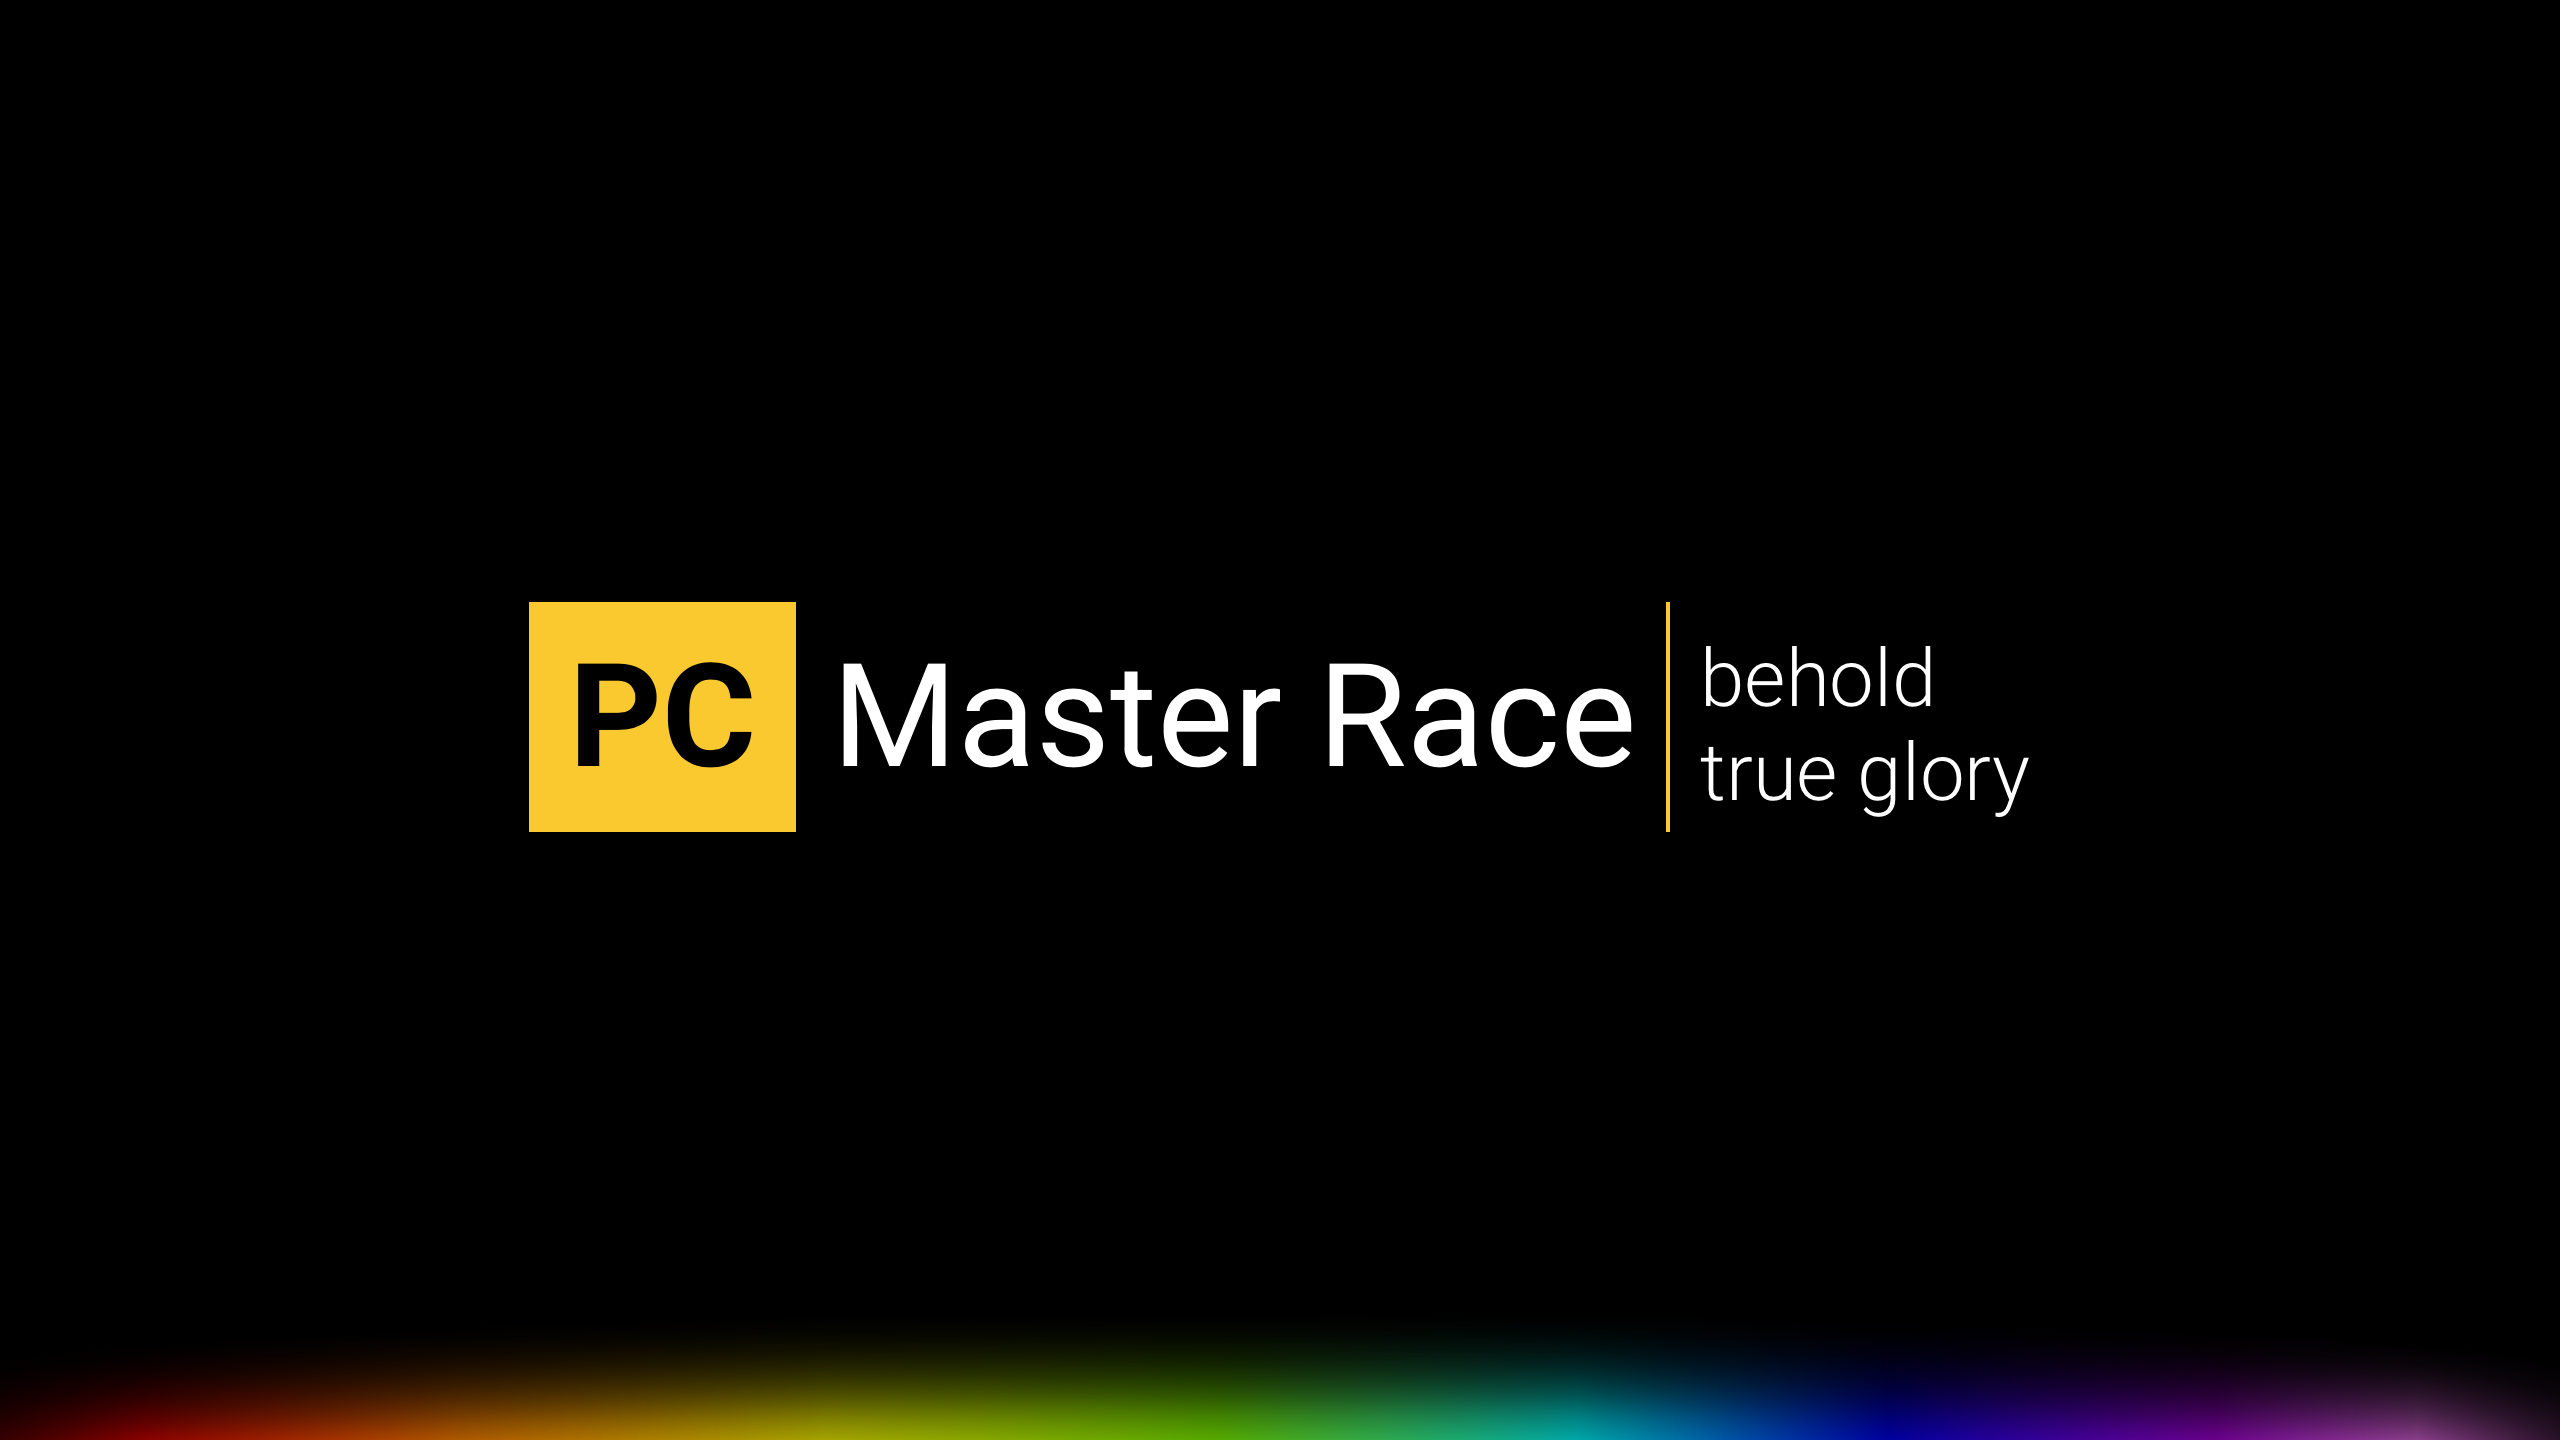 General 2560x1440 PC Master  Race dark black background simple background